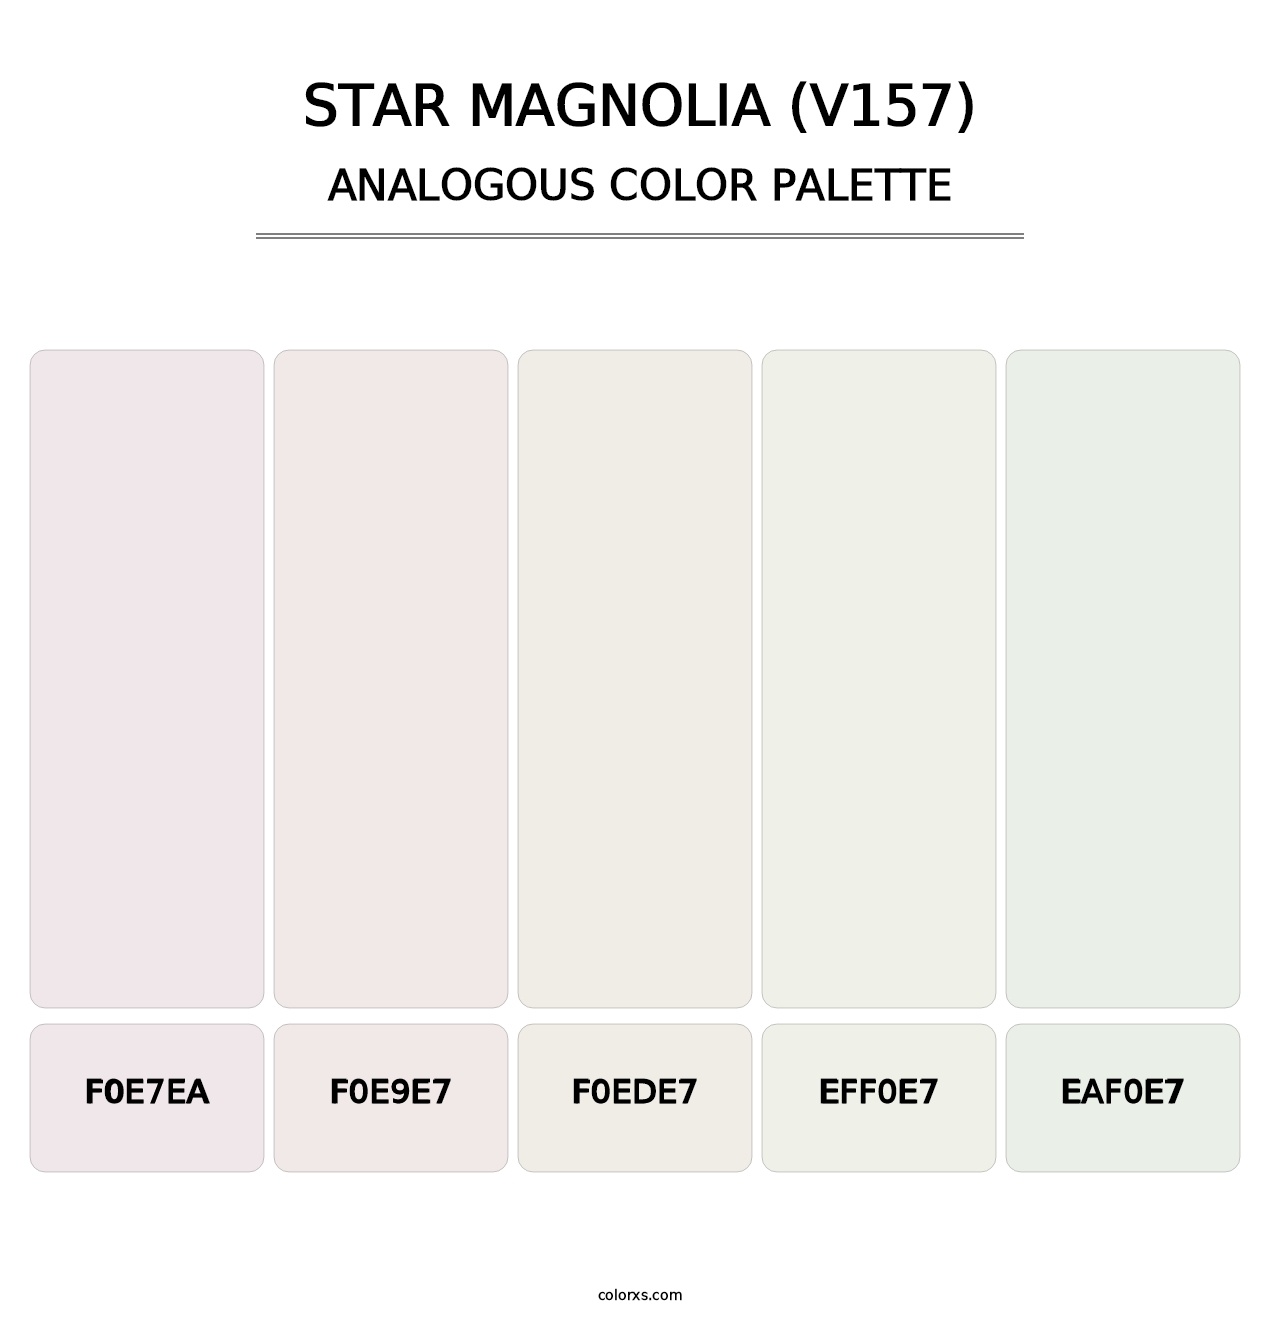 Star Magnolia (V157) - Analogous Color Palette